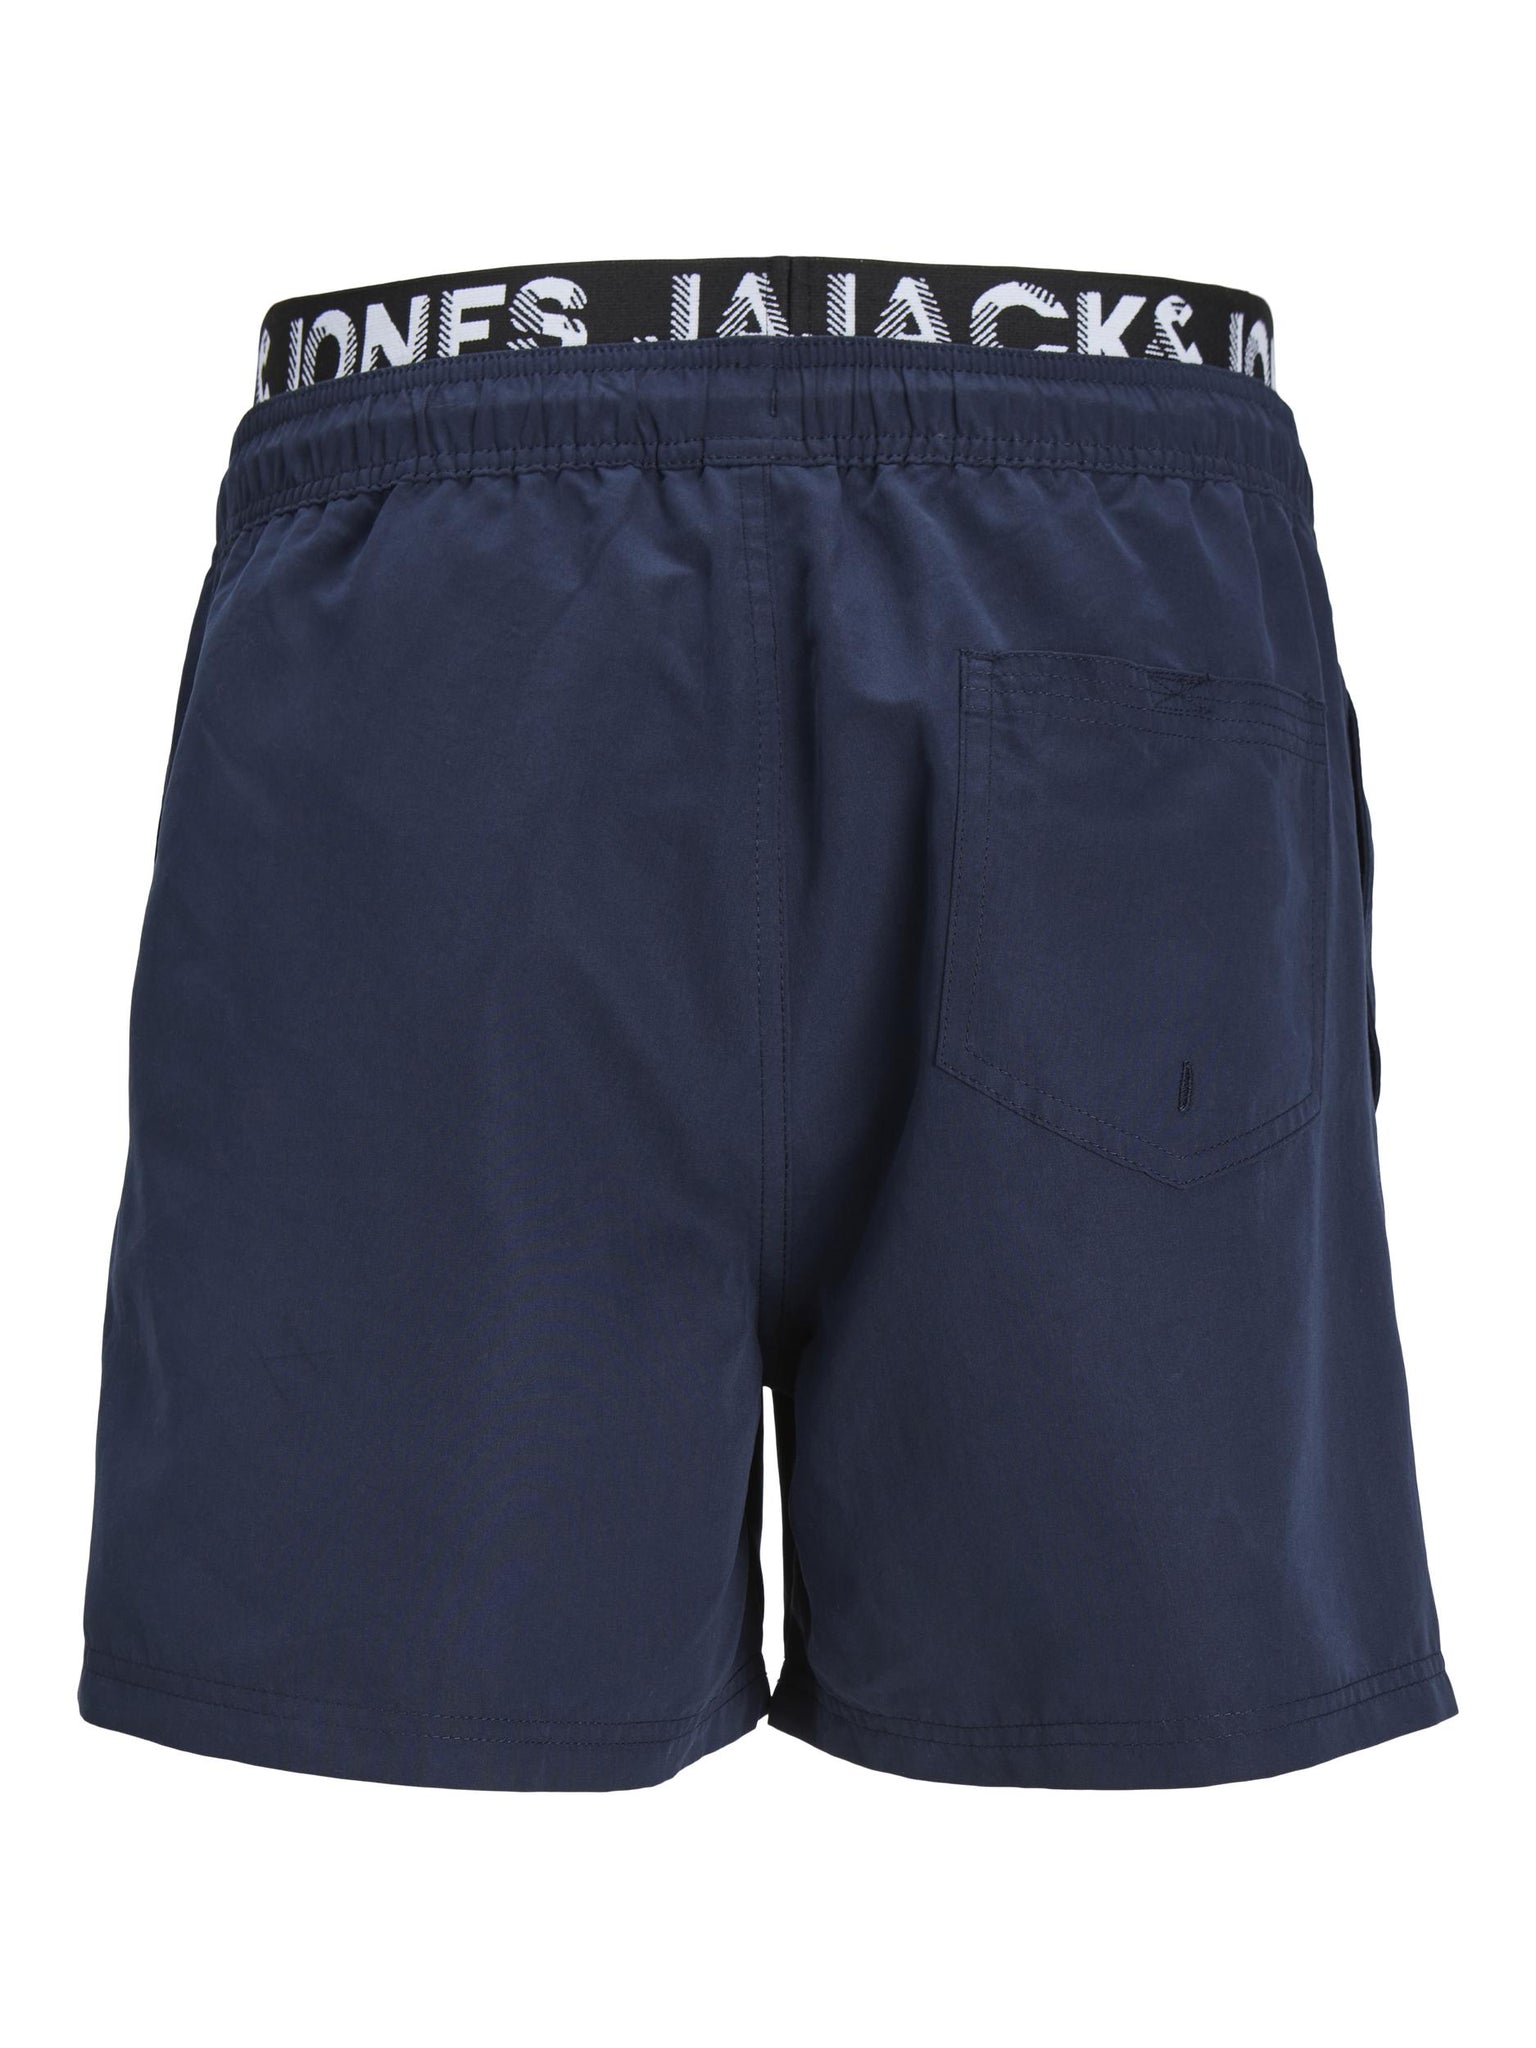 Maillot de bain Jack & Jones Fiji DB WB Navy Blazer